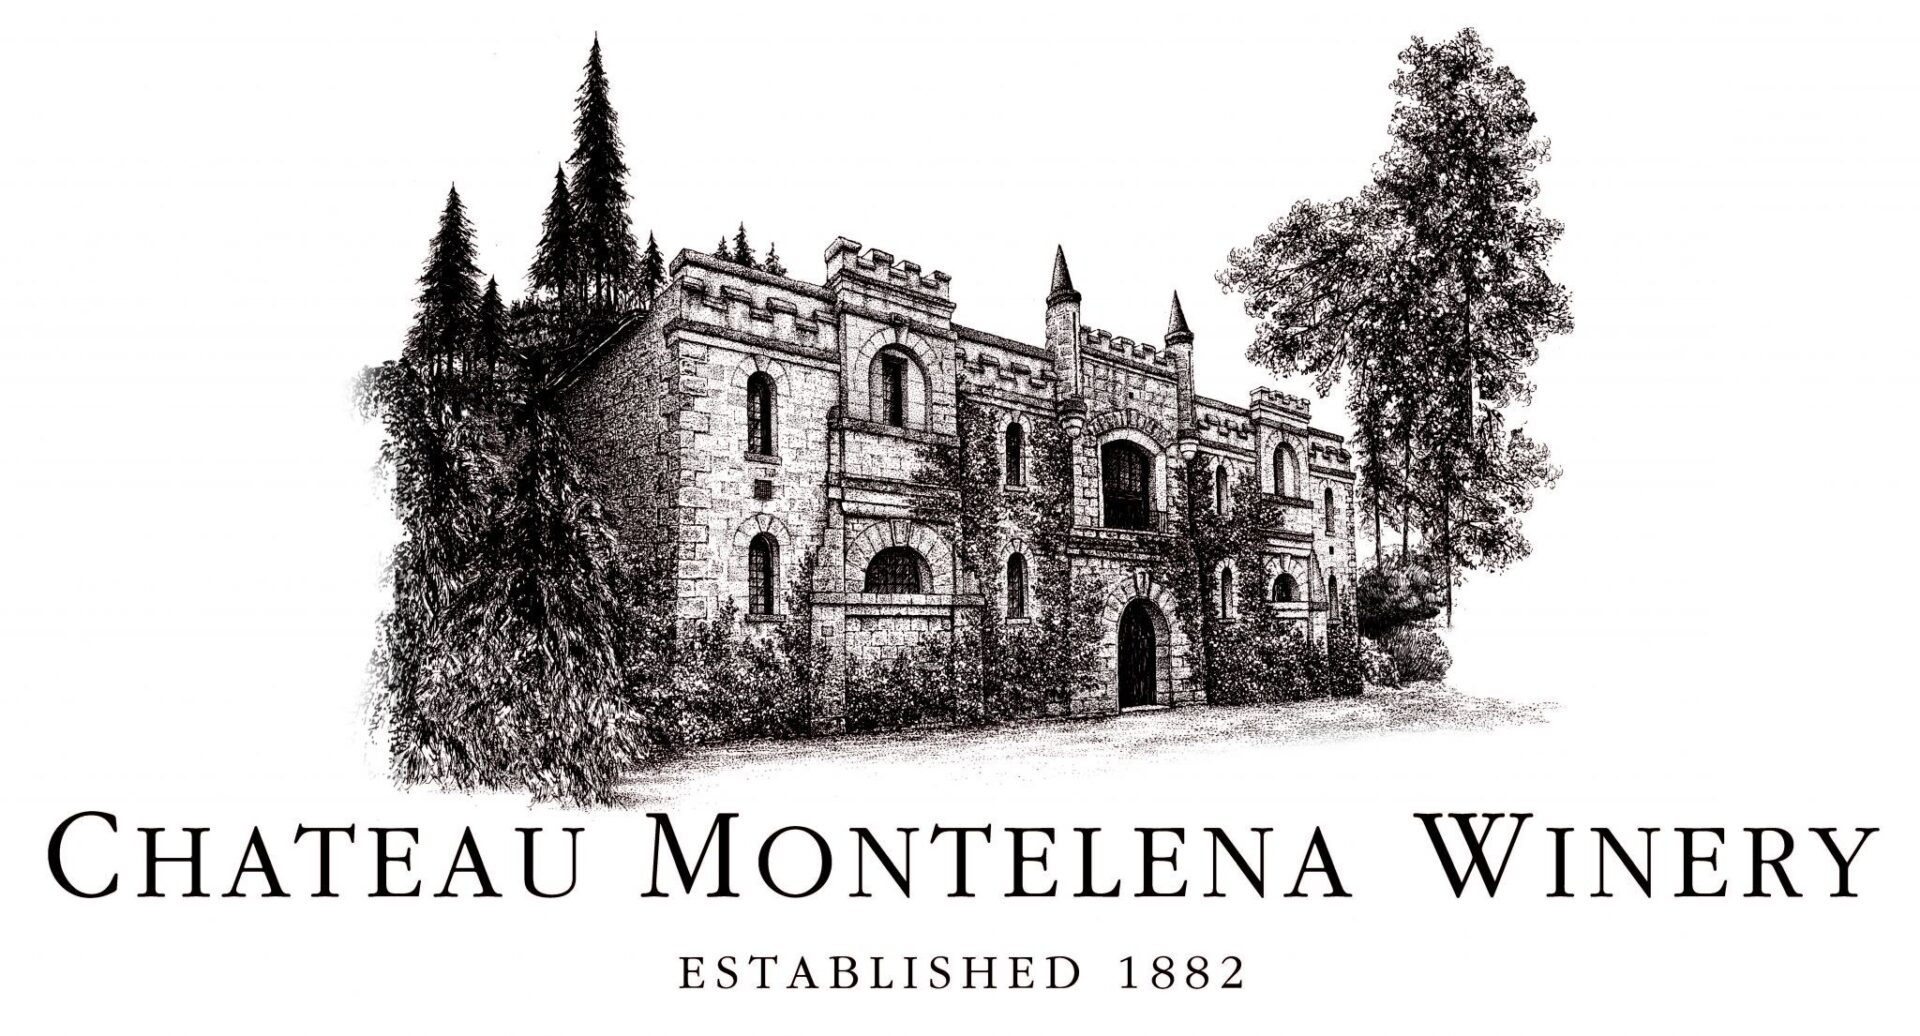 Chateau Montelena Winery logo and illustration